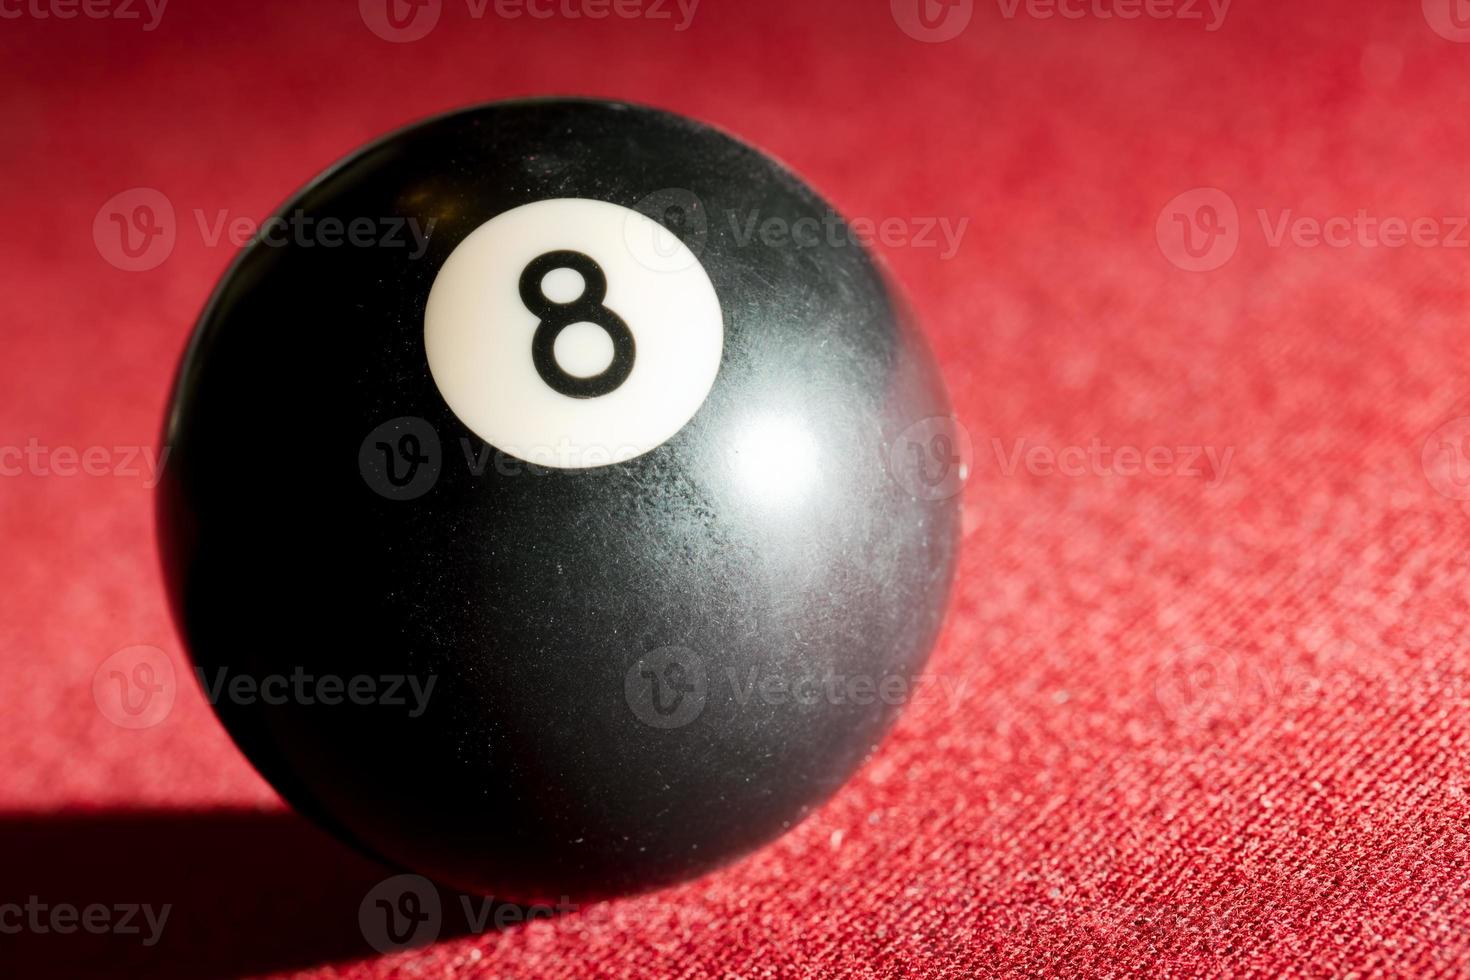 biljart pool of snookerspel. de zwarte bal acht. foto